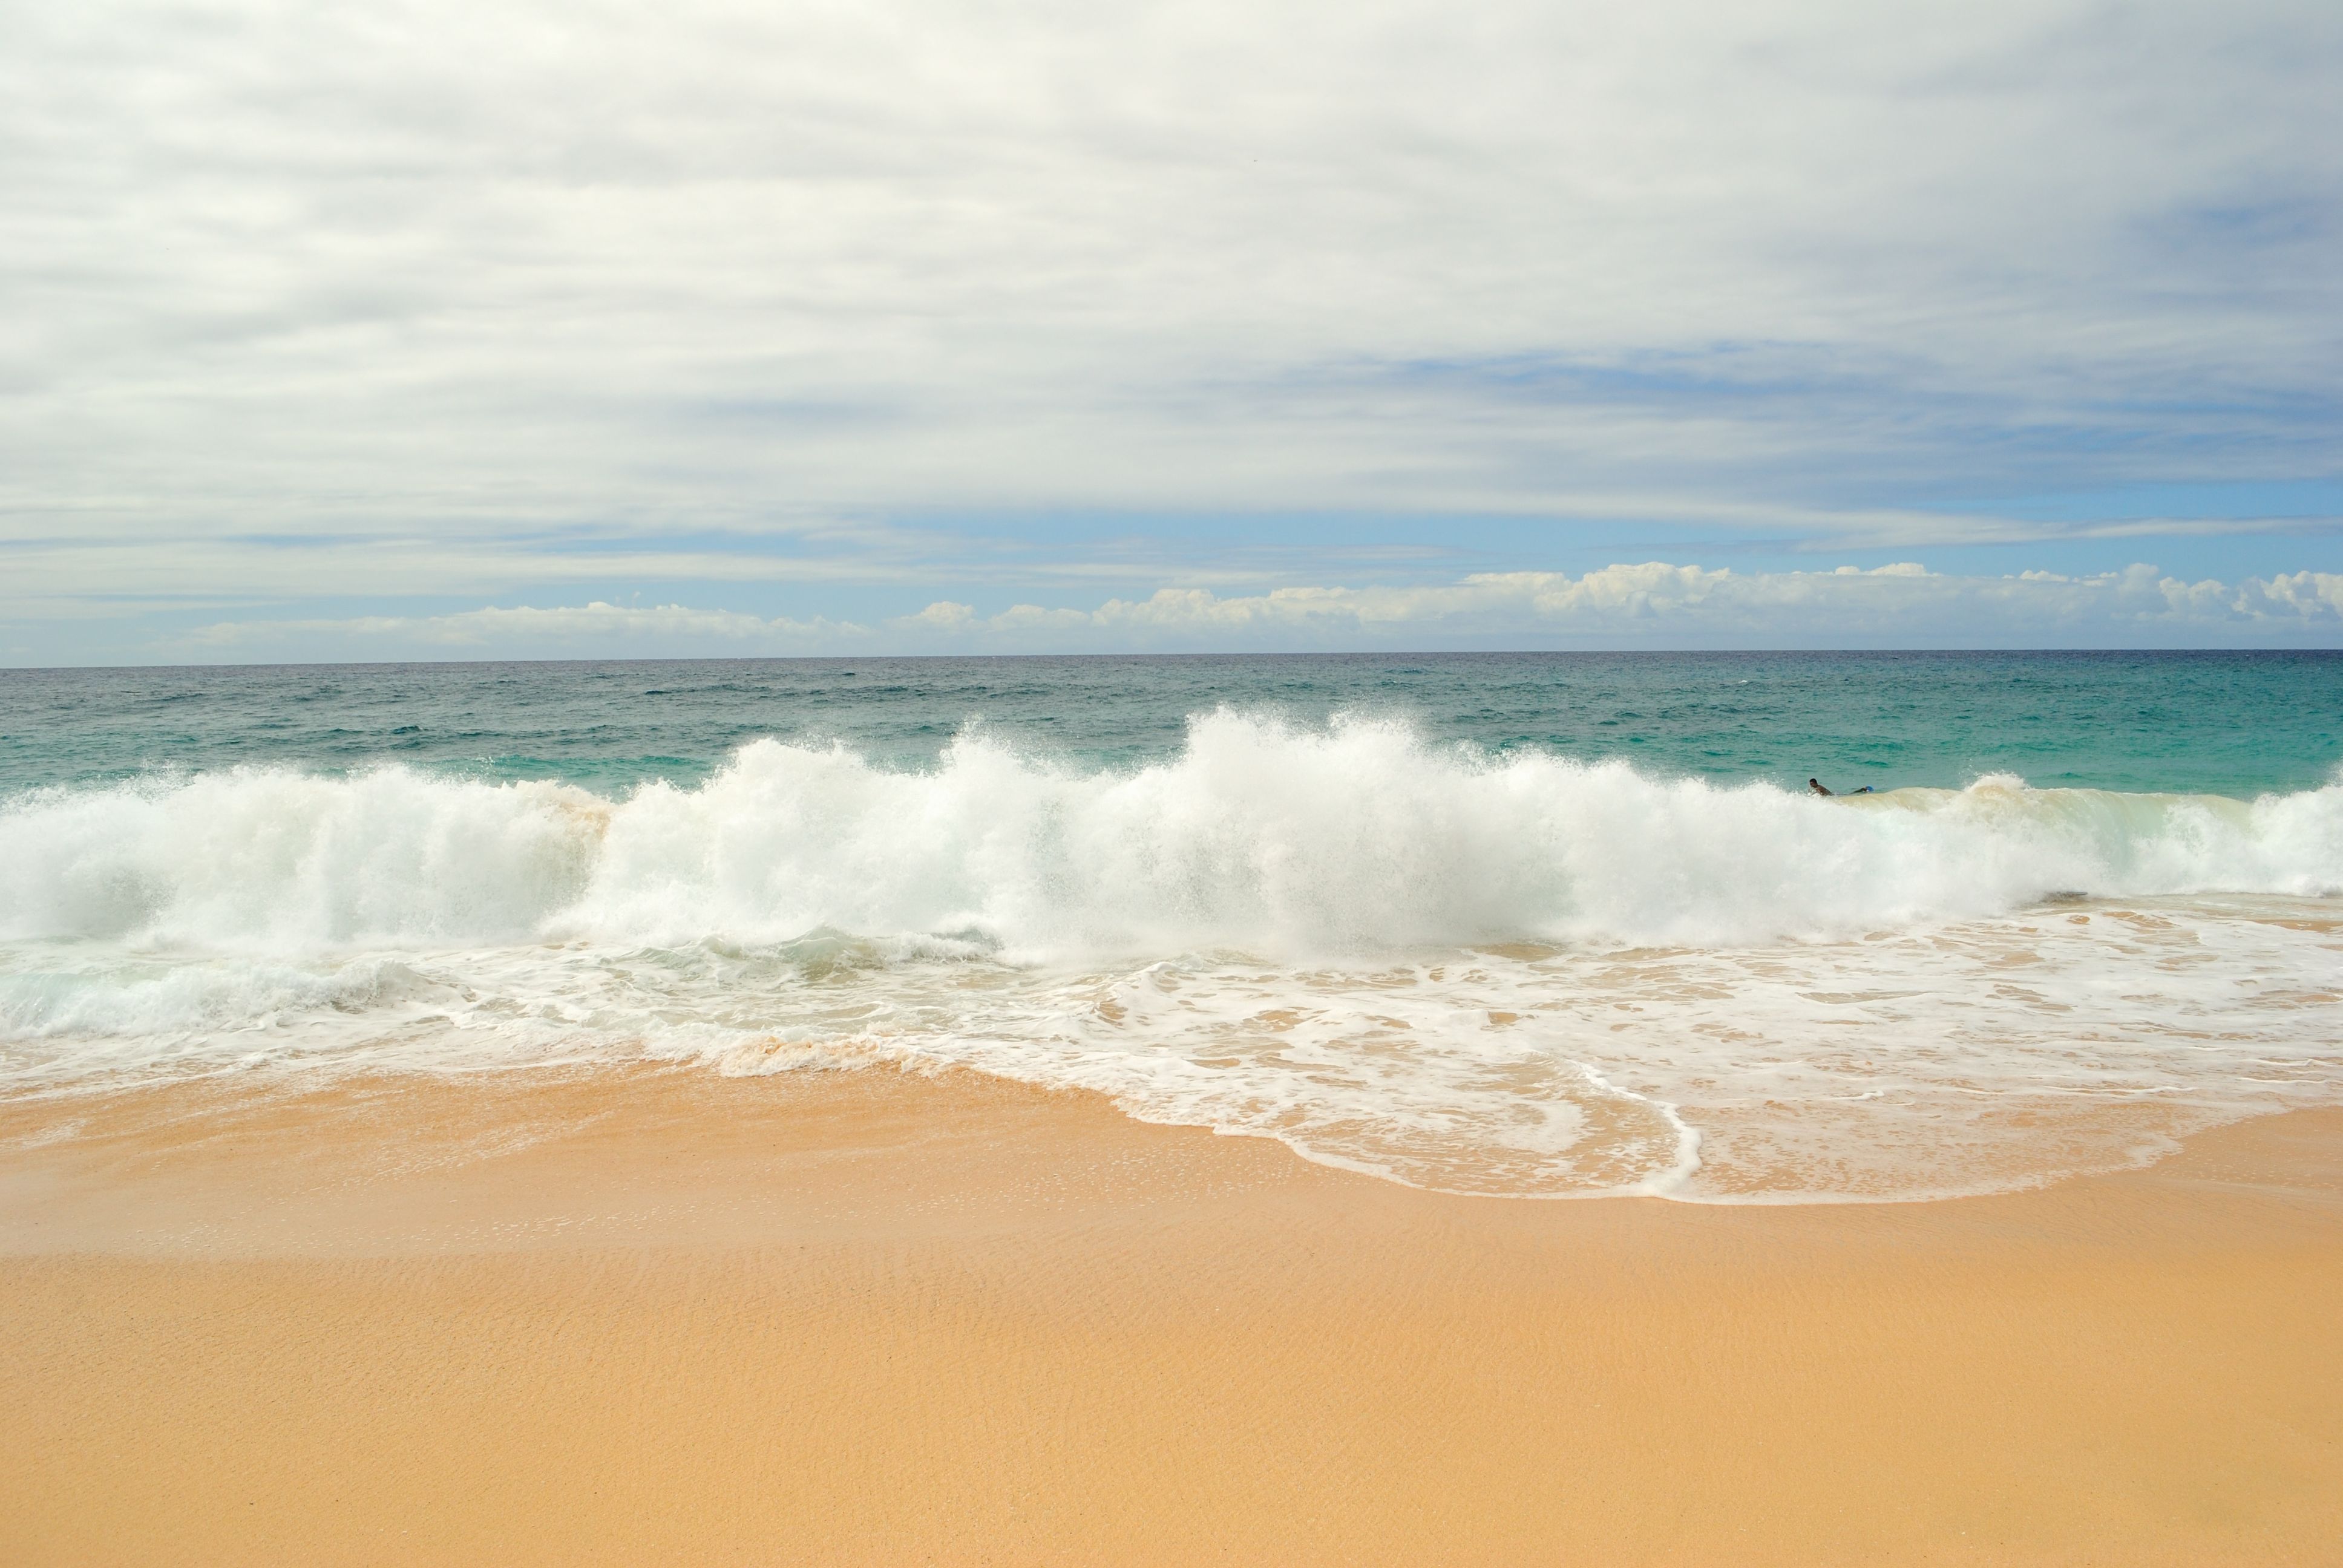 File:Sandy Beach Waves (6225153931).jpg - Wikimedia Commons